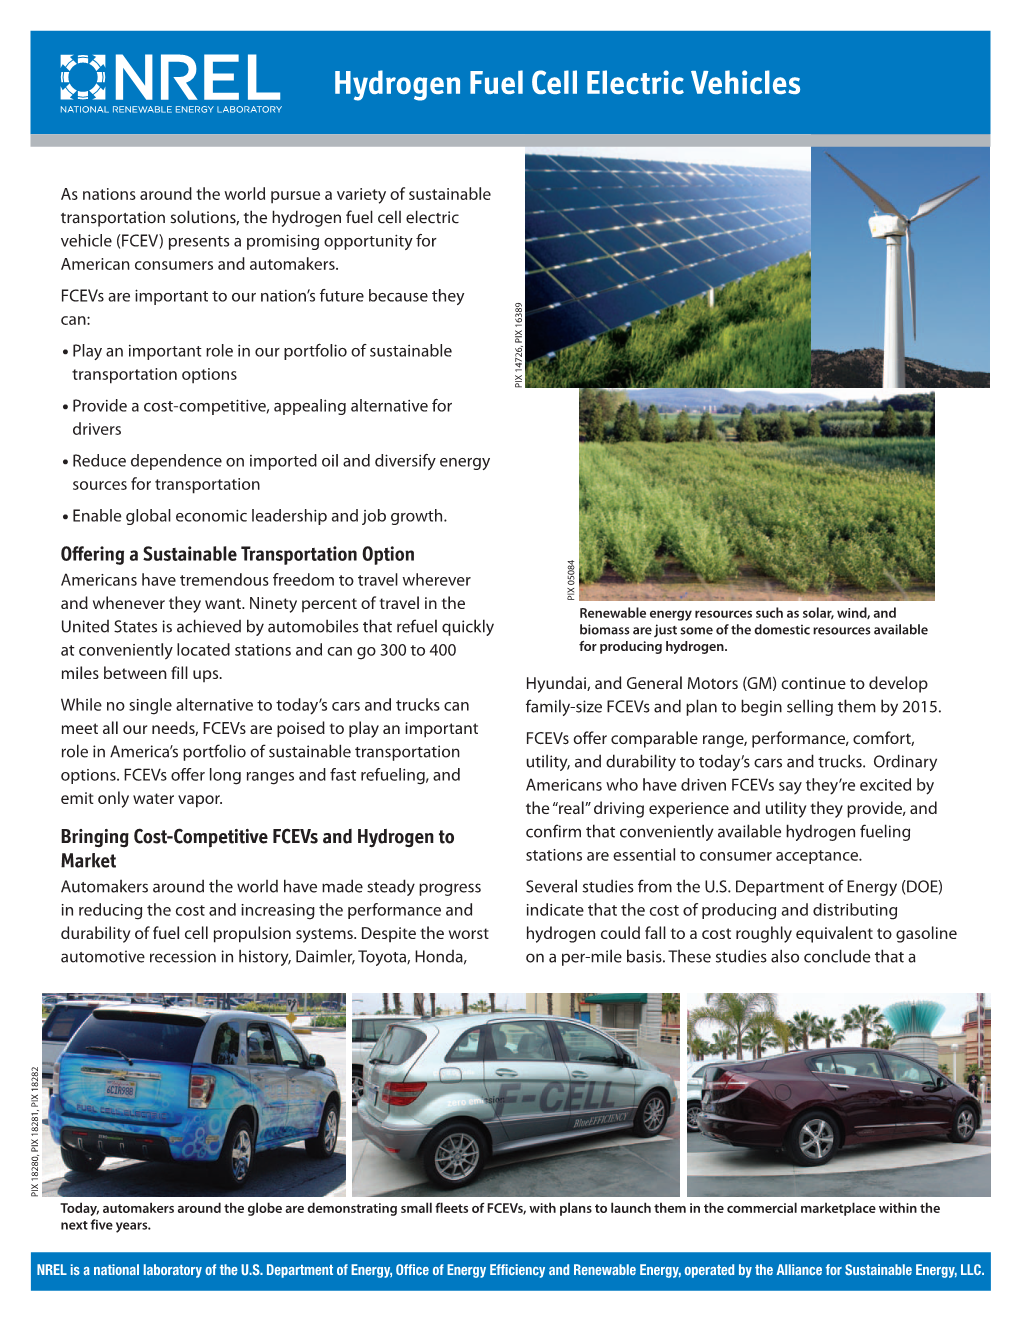 Hydrogen Fuel Cell Electric Vehicles (Fact Sheet), NREL (National DocsLib